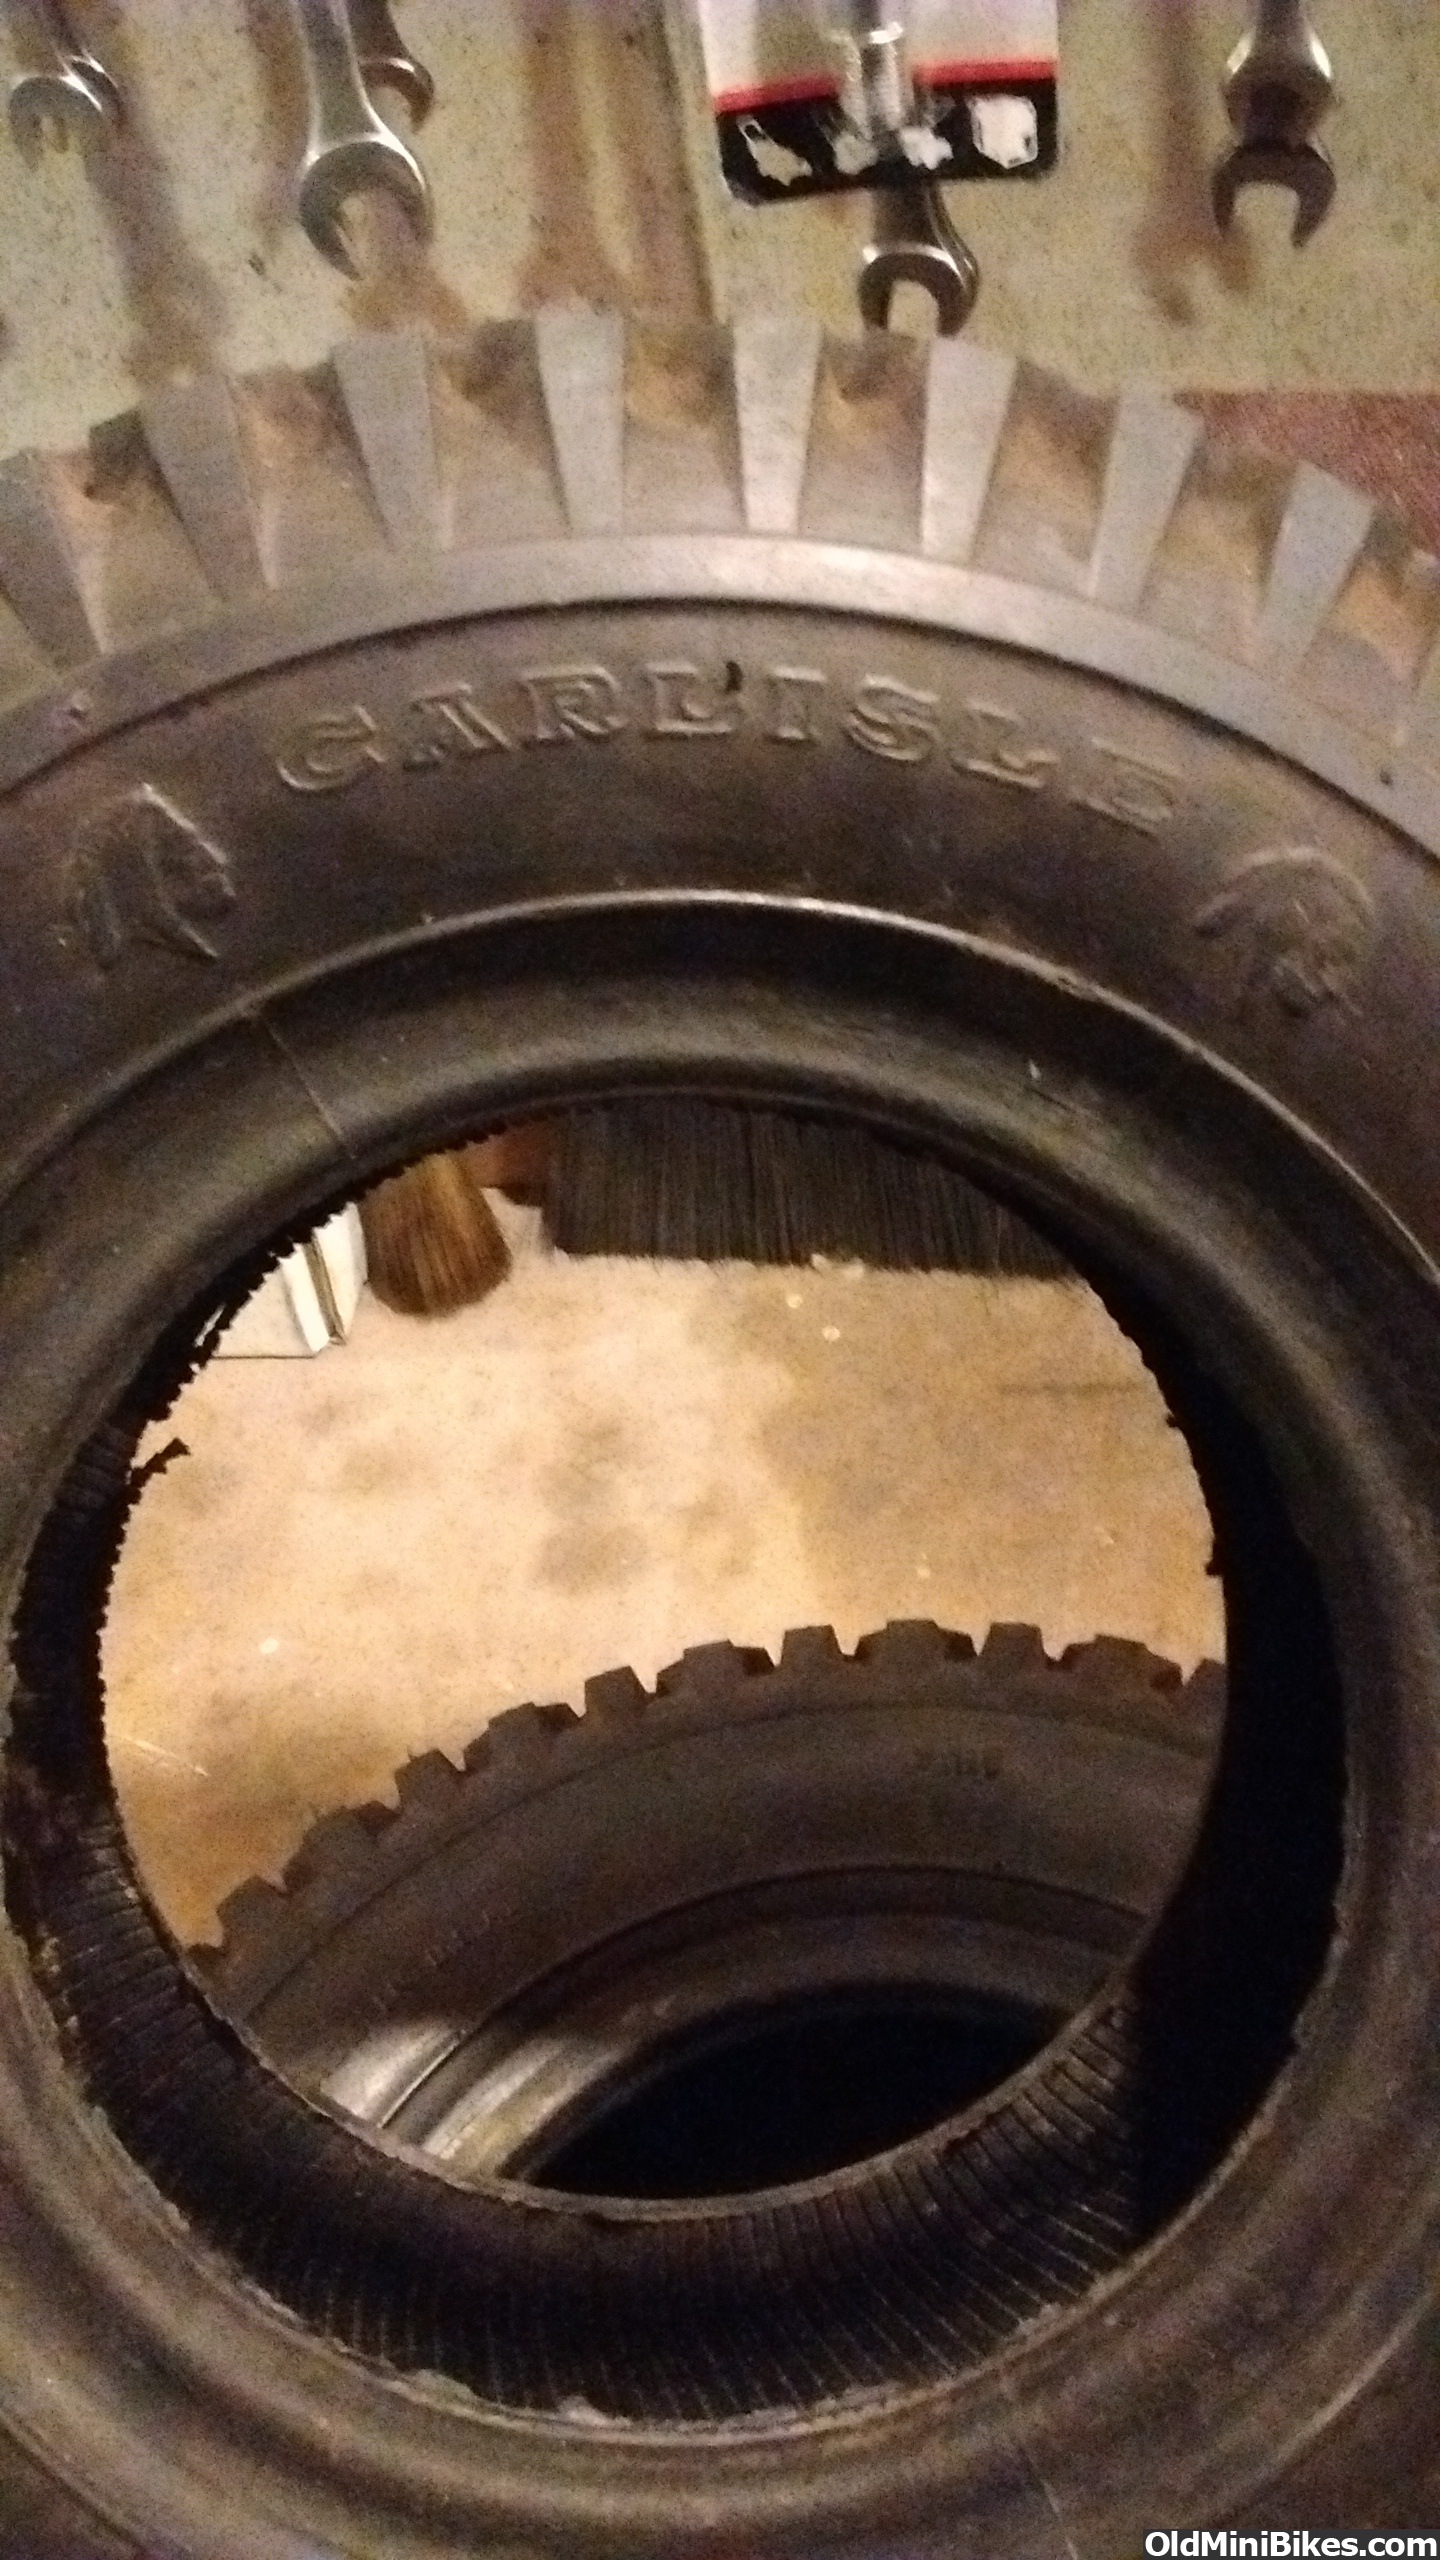 Carlisle tires | OldMiniBikes.com